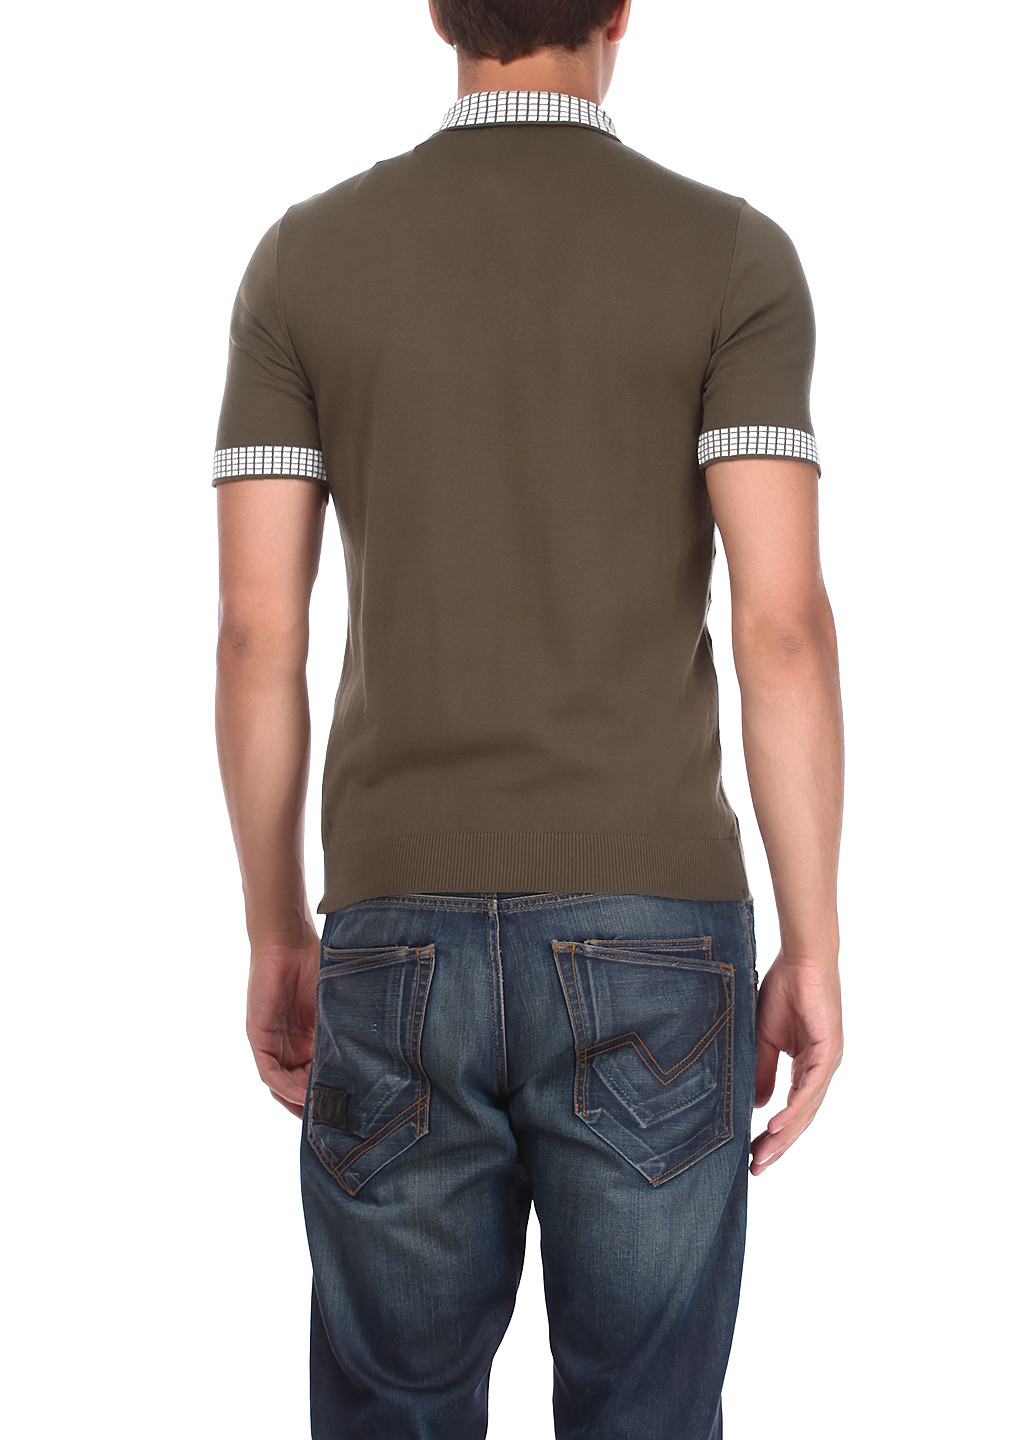 Оливковая (хаки) футболка-поло для мужчин Van Cliff однотонная